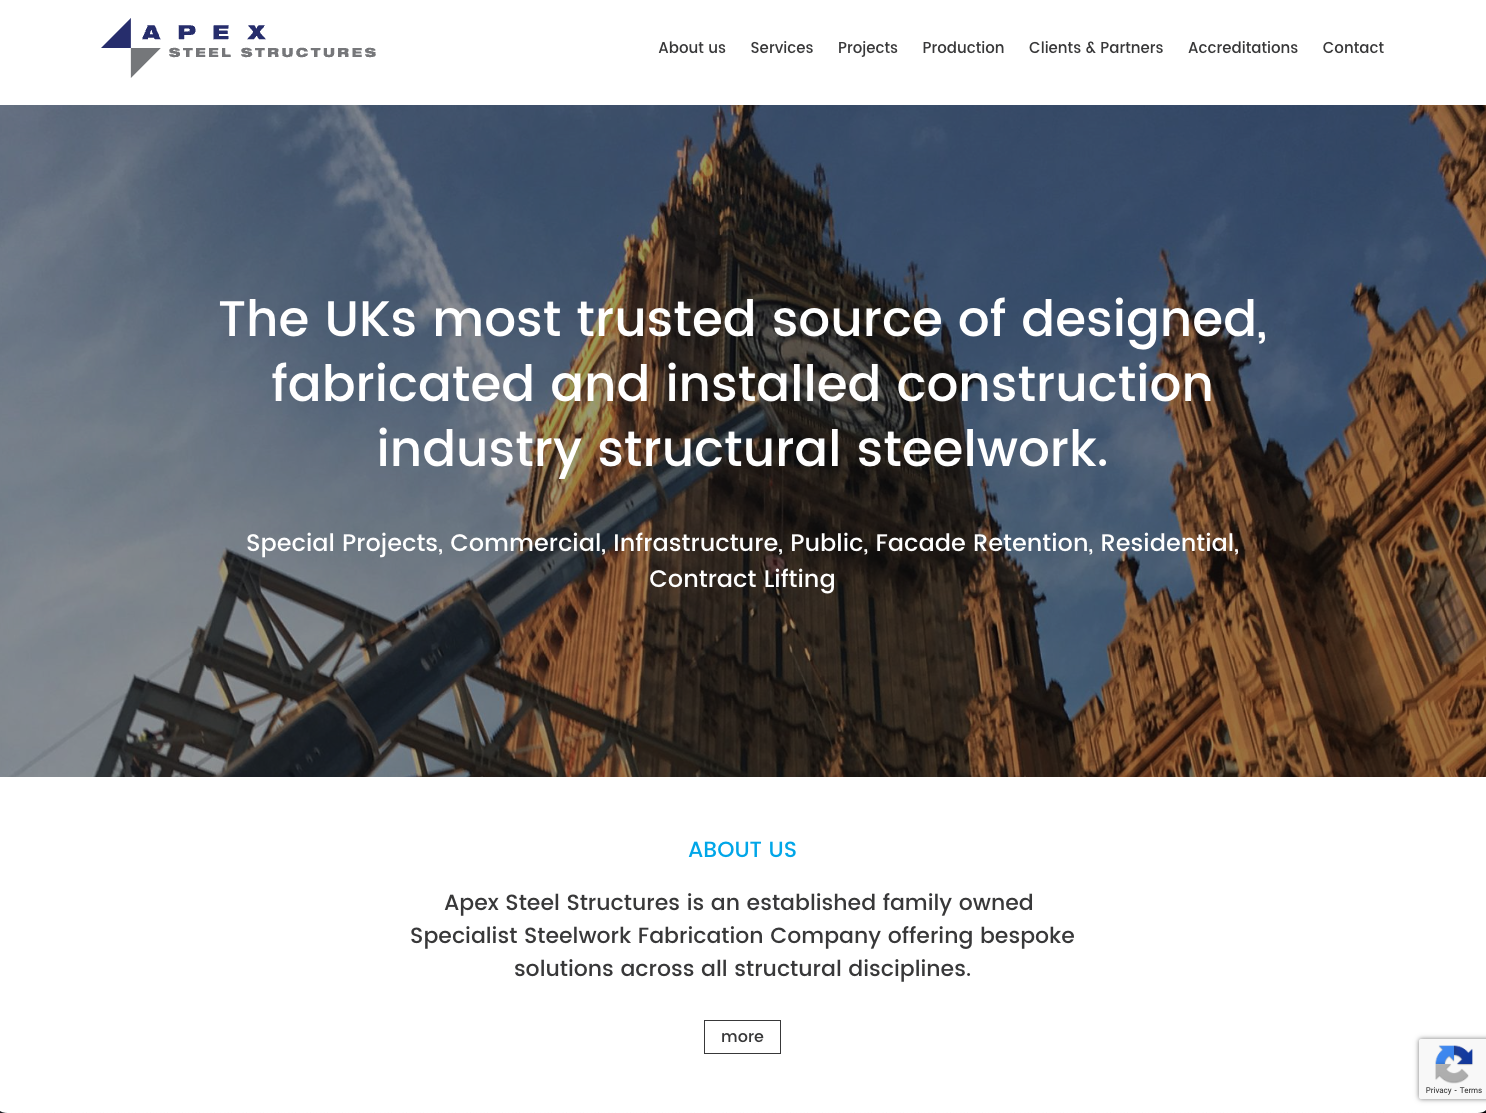 Apex Steel website designed by Brand-ing